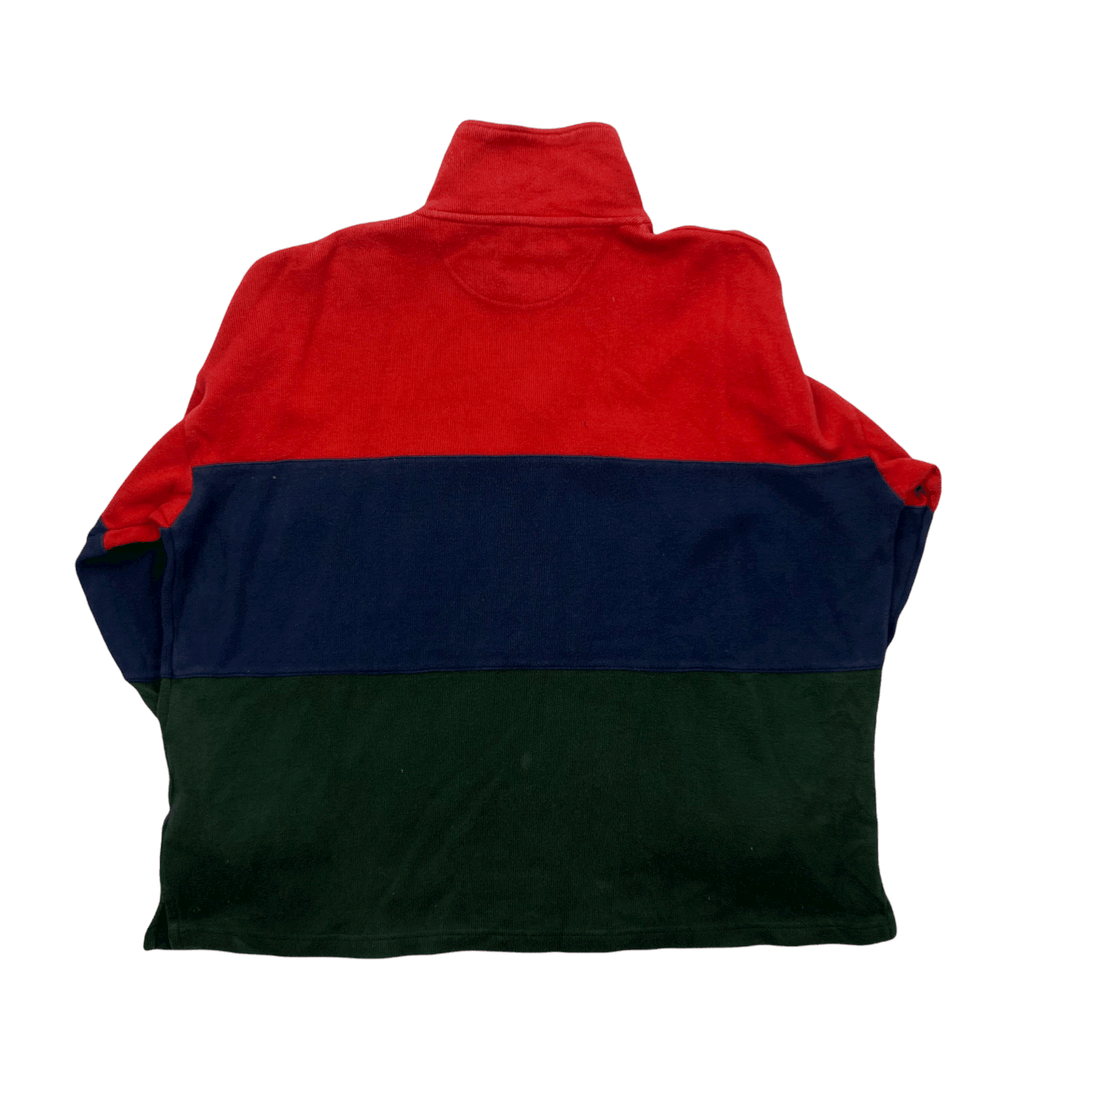 Vintage 90s Red, Navy Blue + Green Yves Saint Laurent Spell-Out Quarter Zip Sweatshirt - Medium - The Streetwear Studio